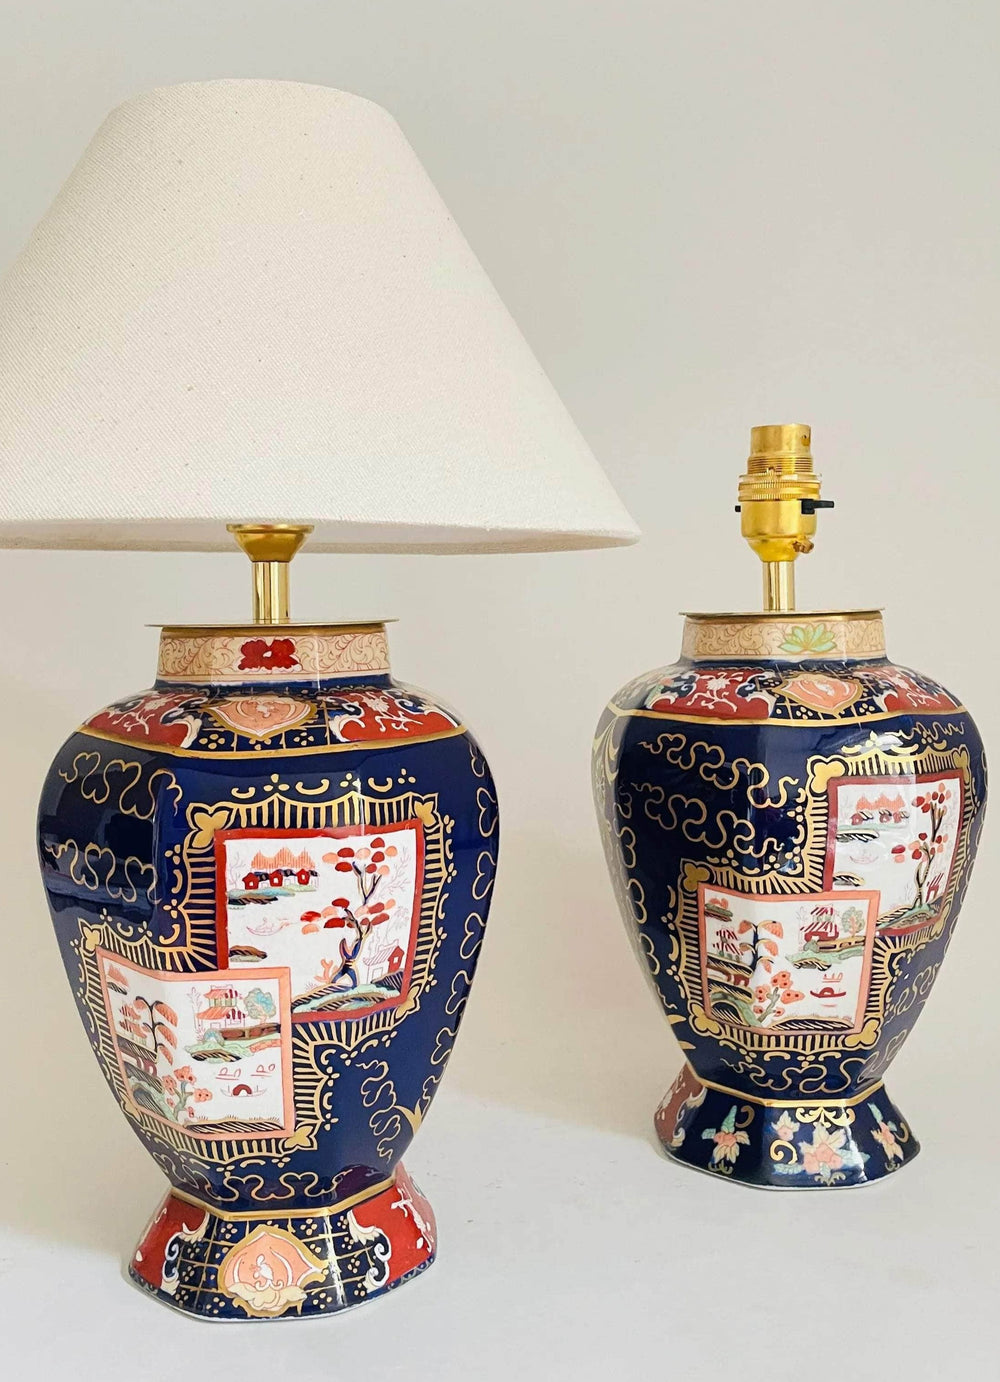 Antique Mason's Lamp